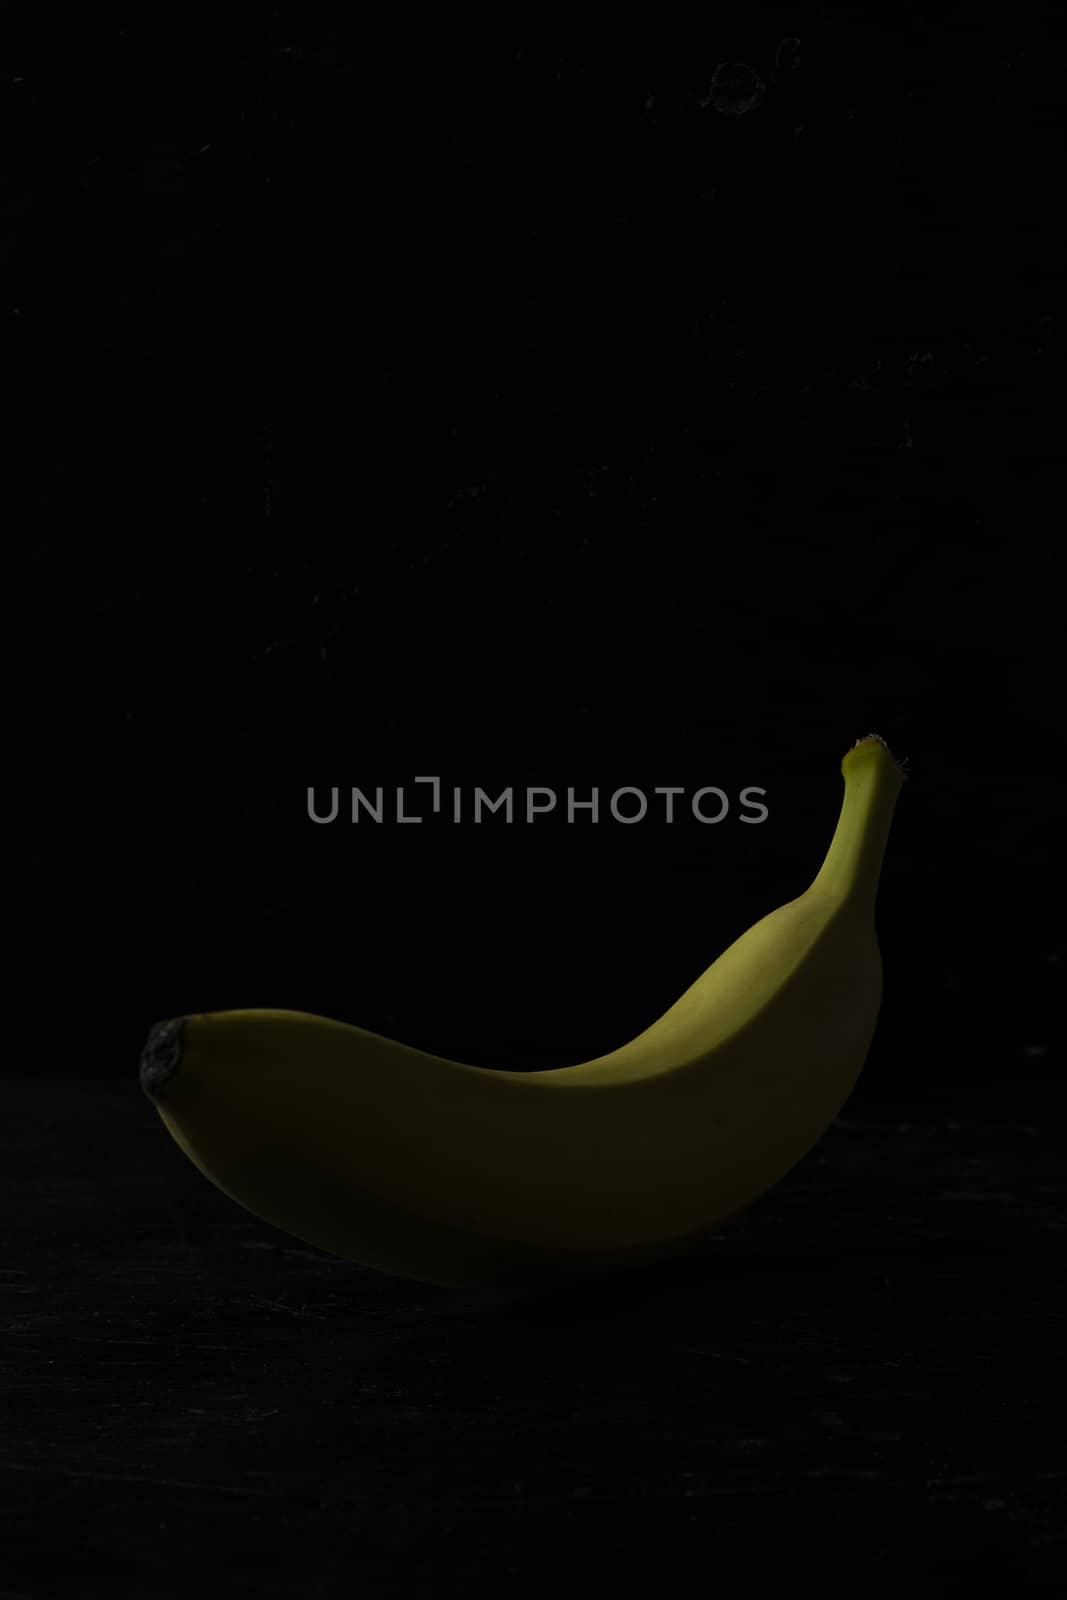 Single yellow banana on black wooden background by sashokddt